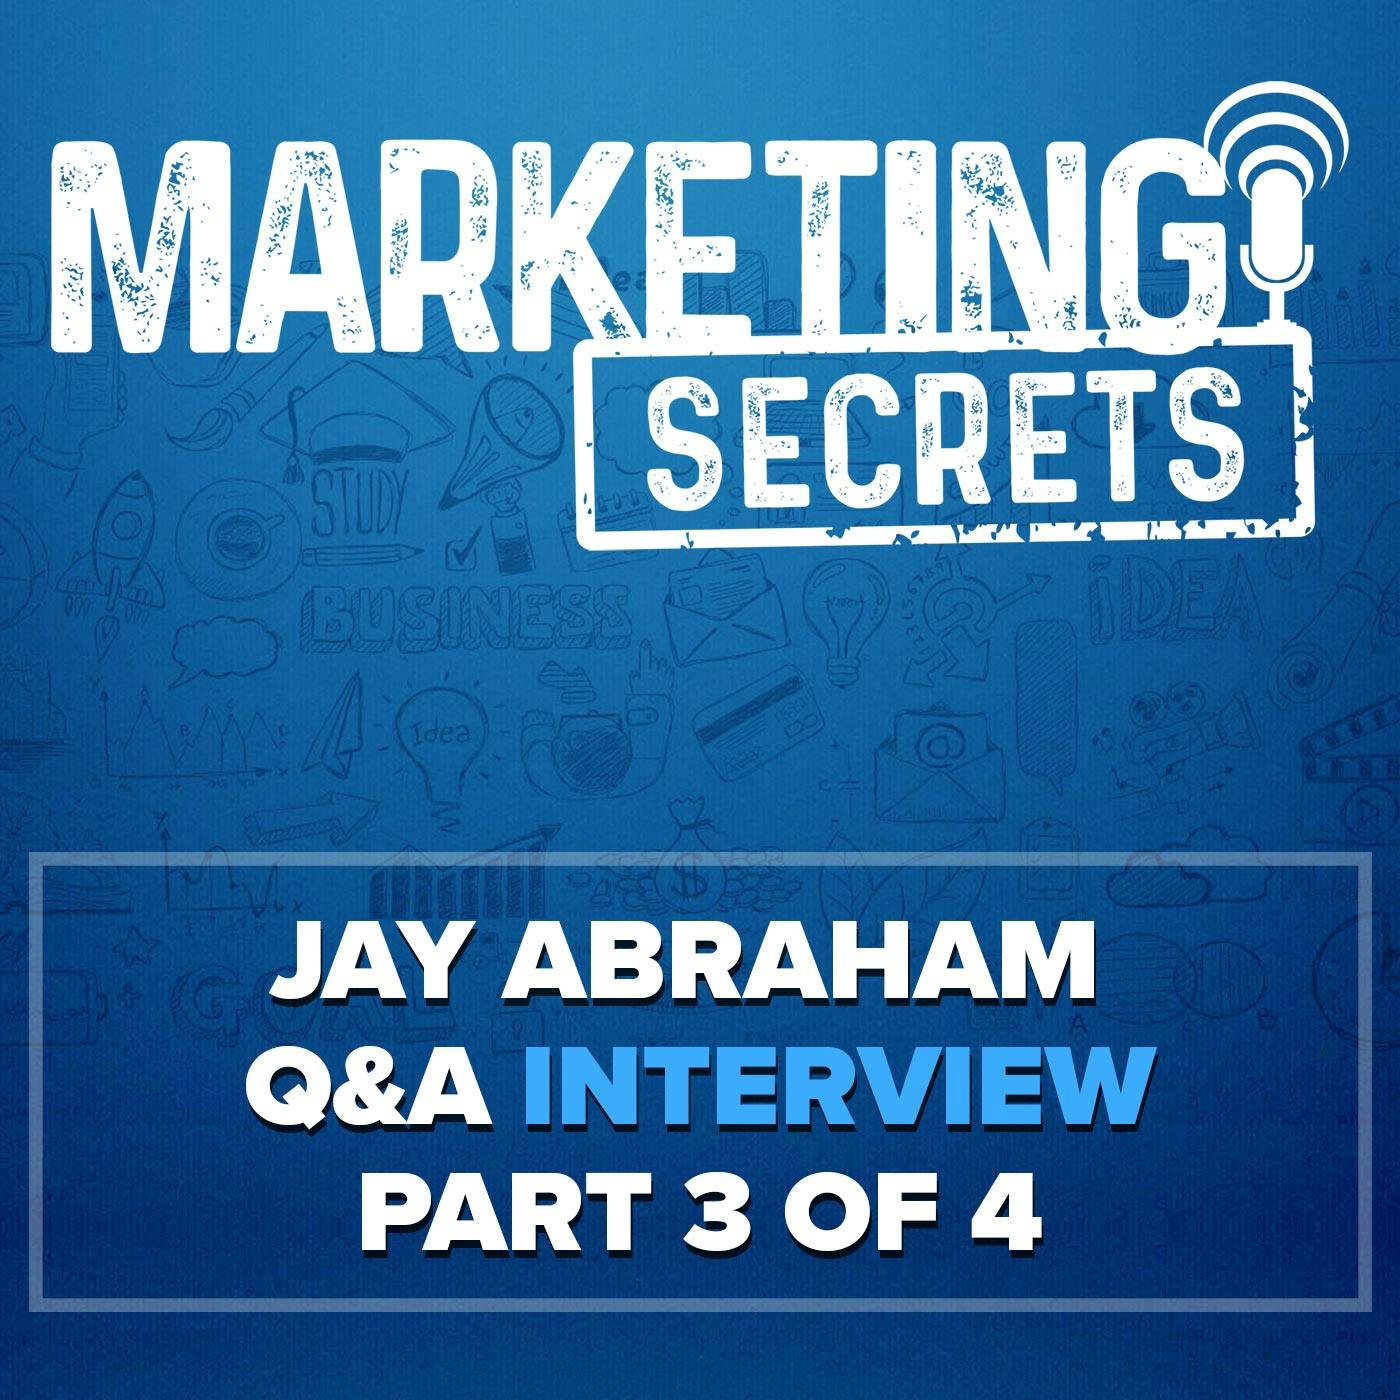 Jay Abraham Q&A Interview - Part 3 of 4